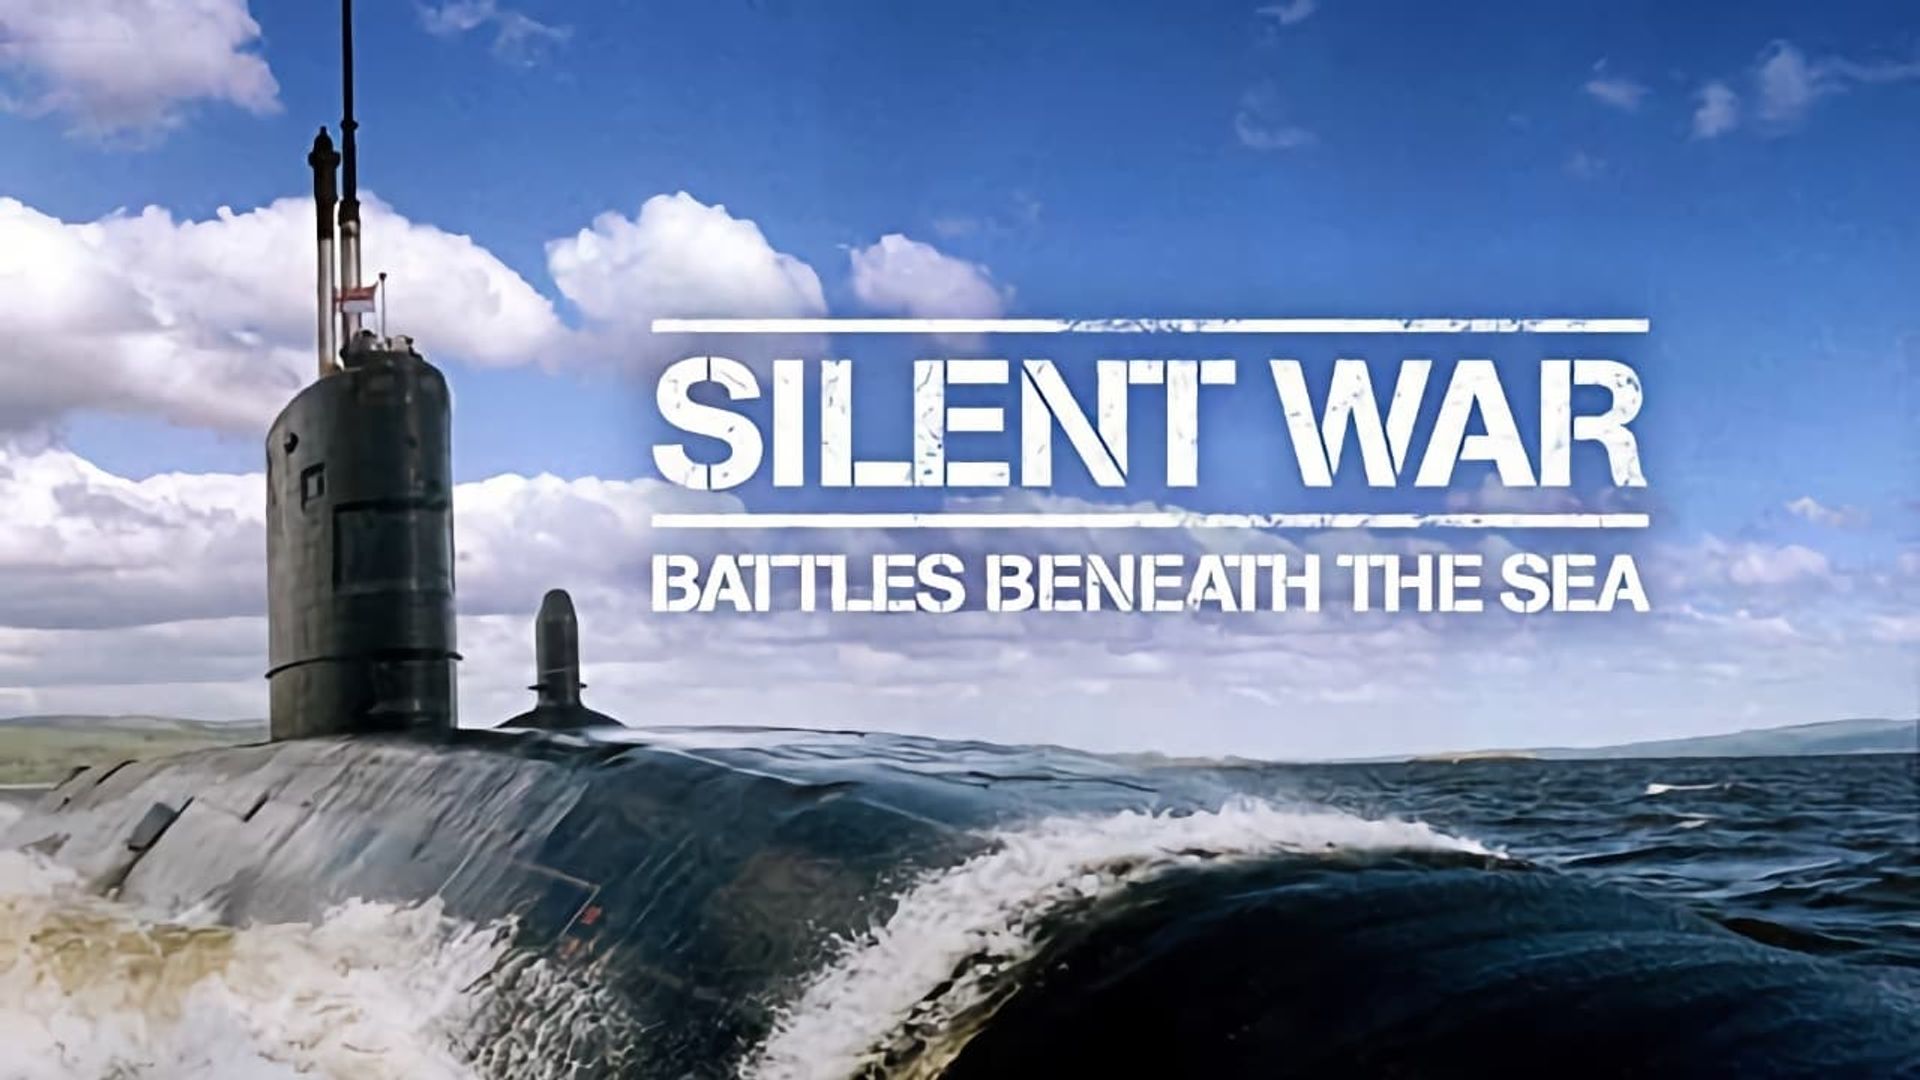 The Silent War background